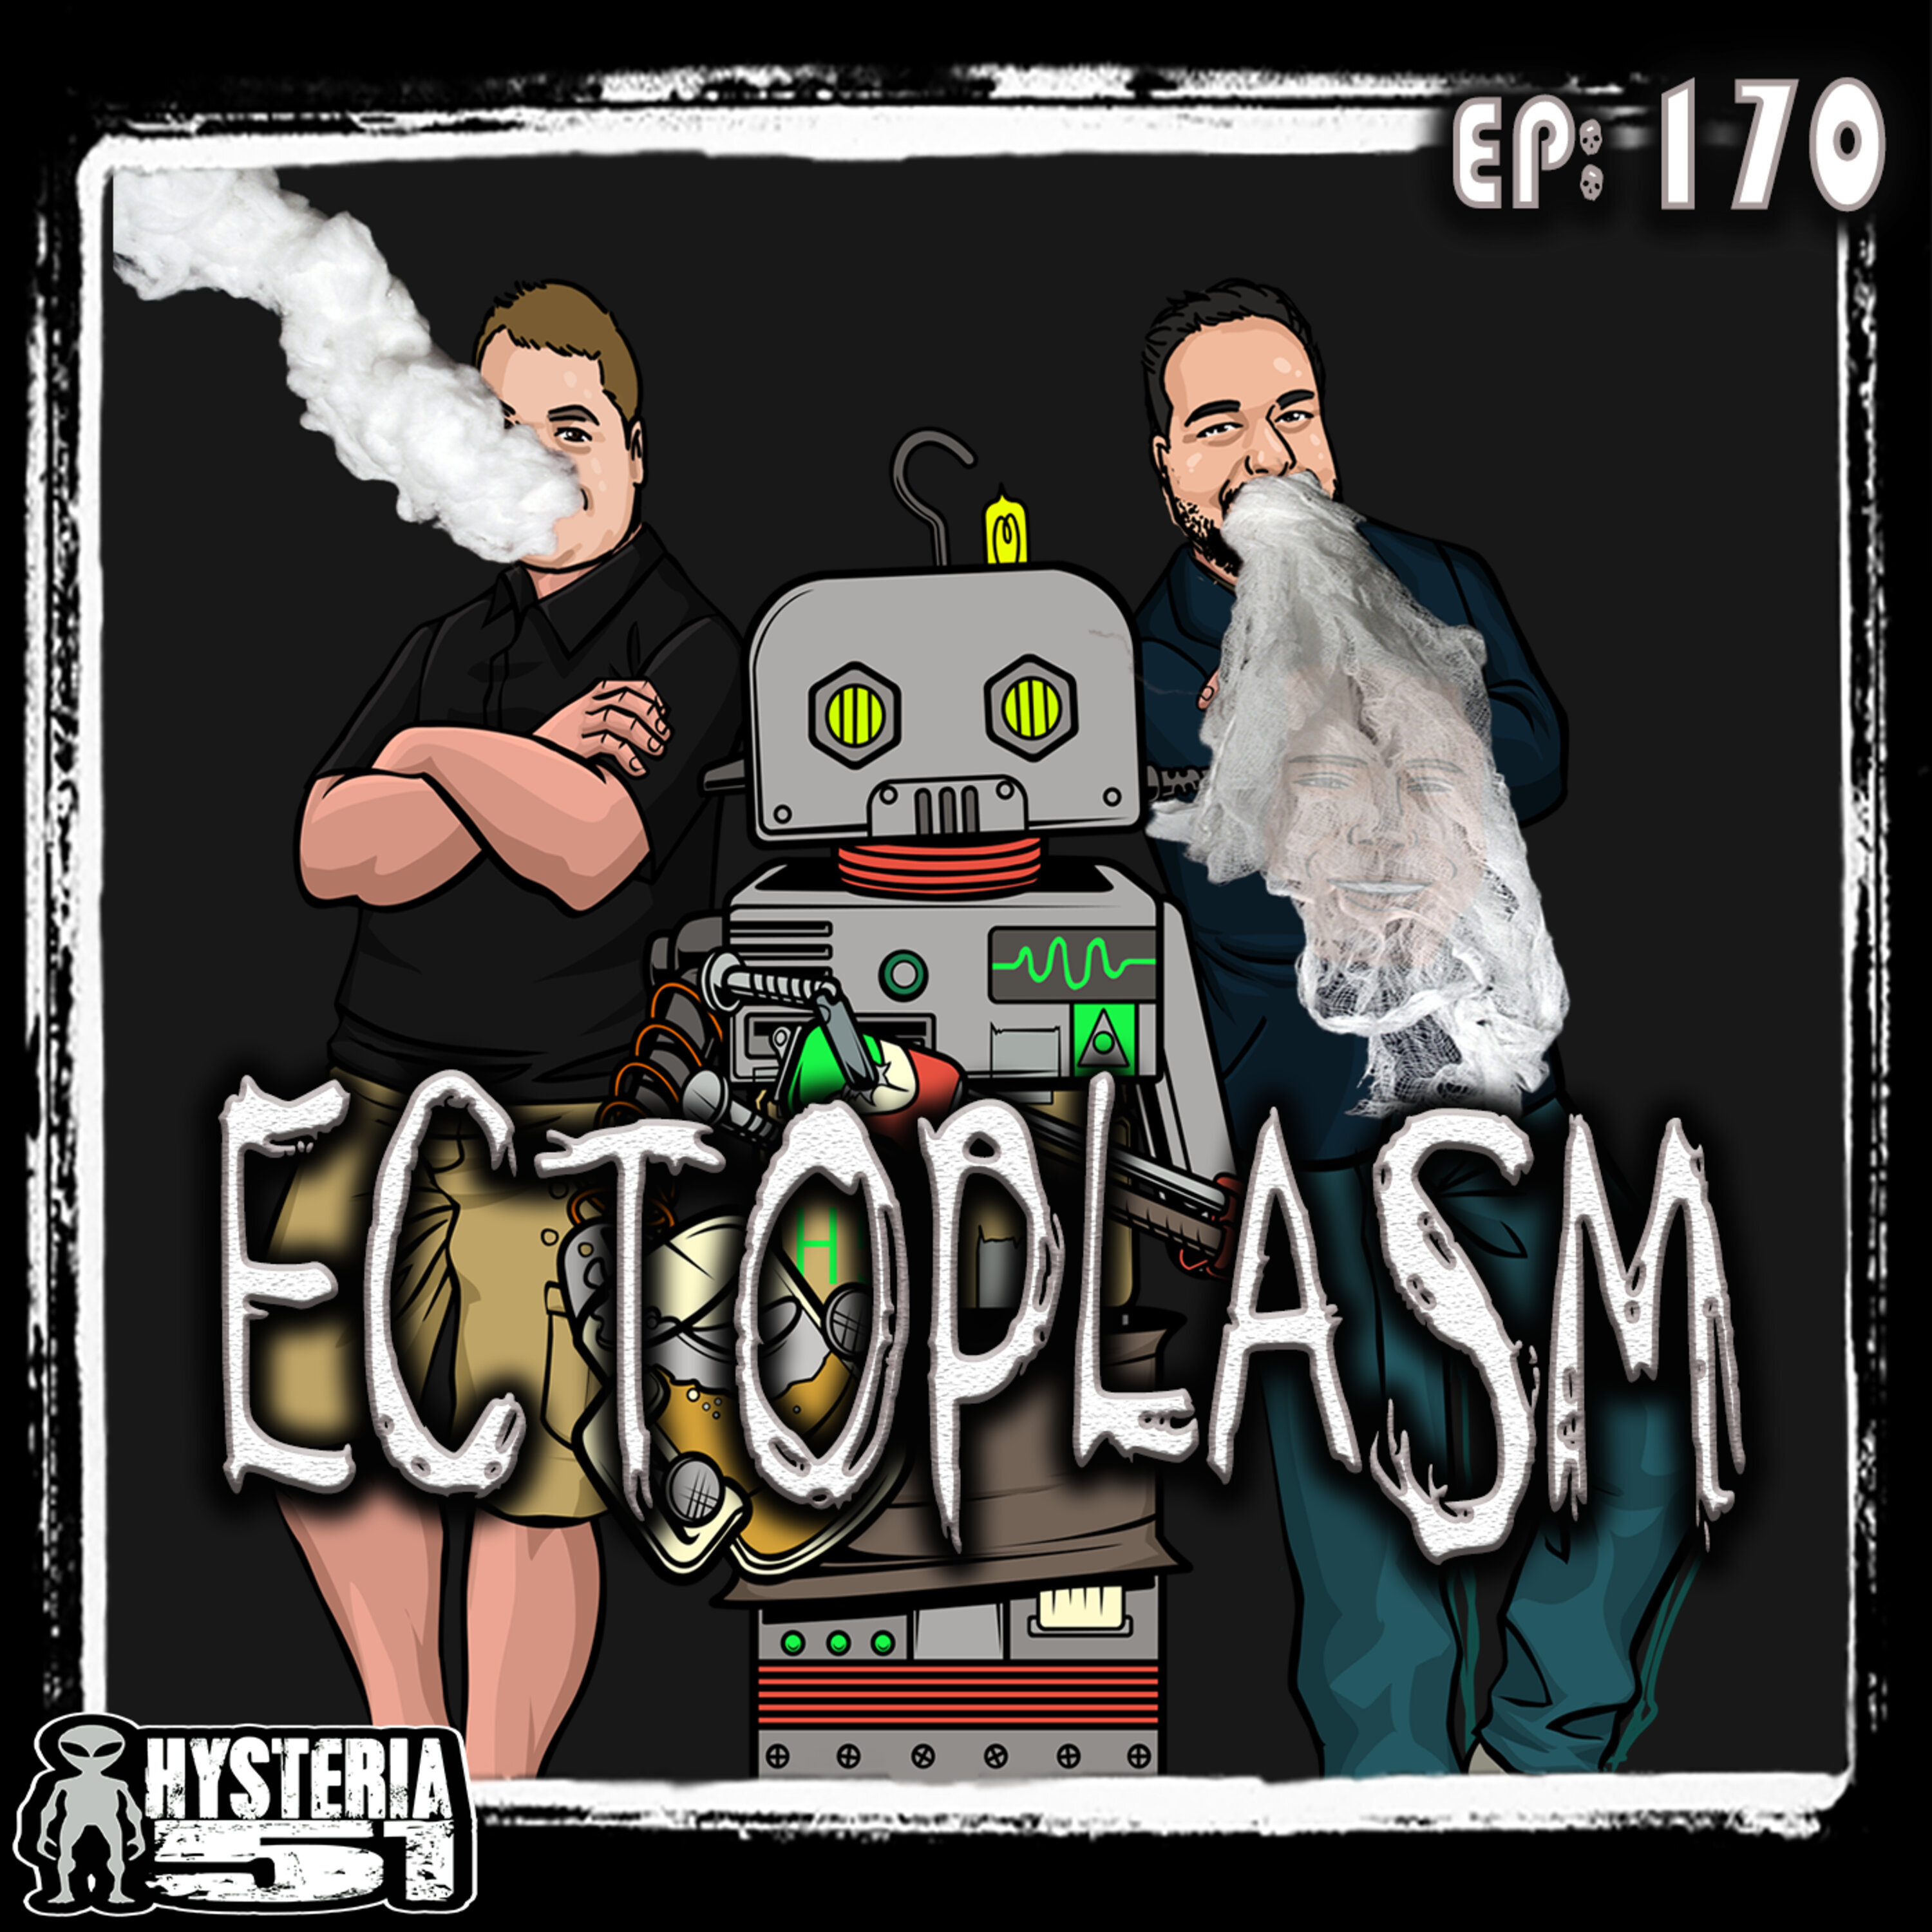 Ectoplasm: Real Ghost Goo or Make-Believe Muck? | 170 Image